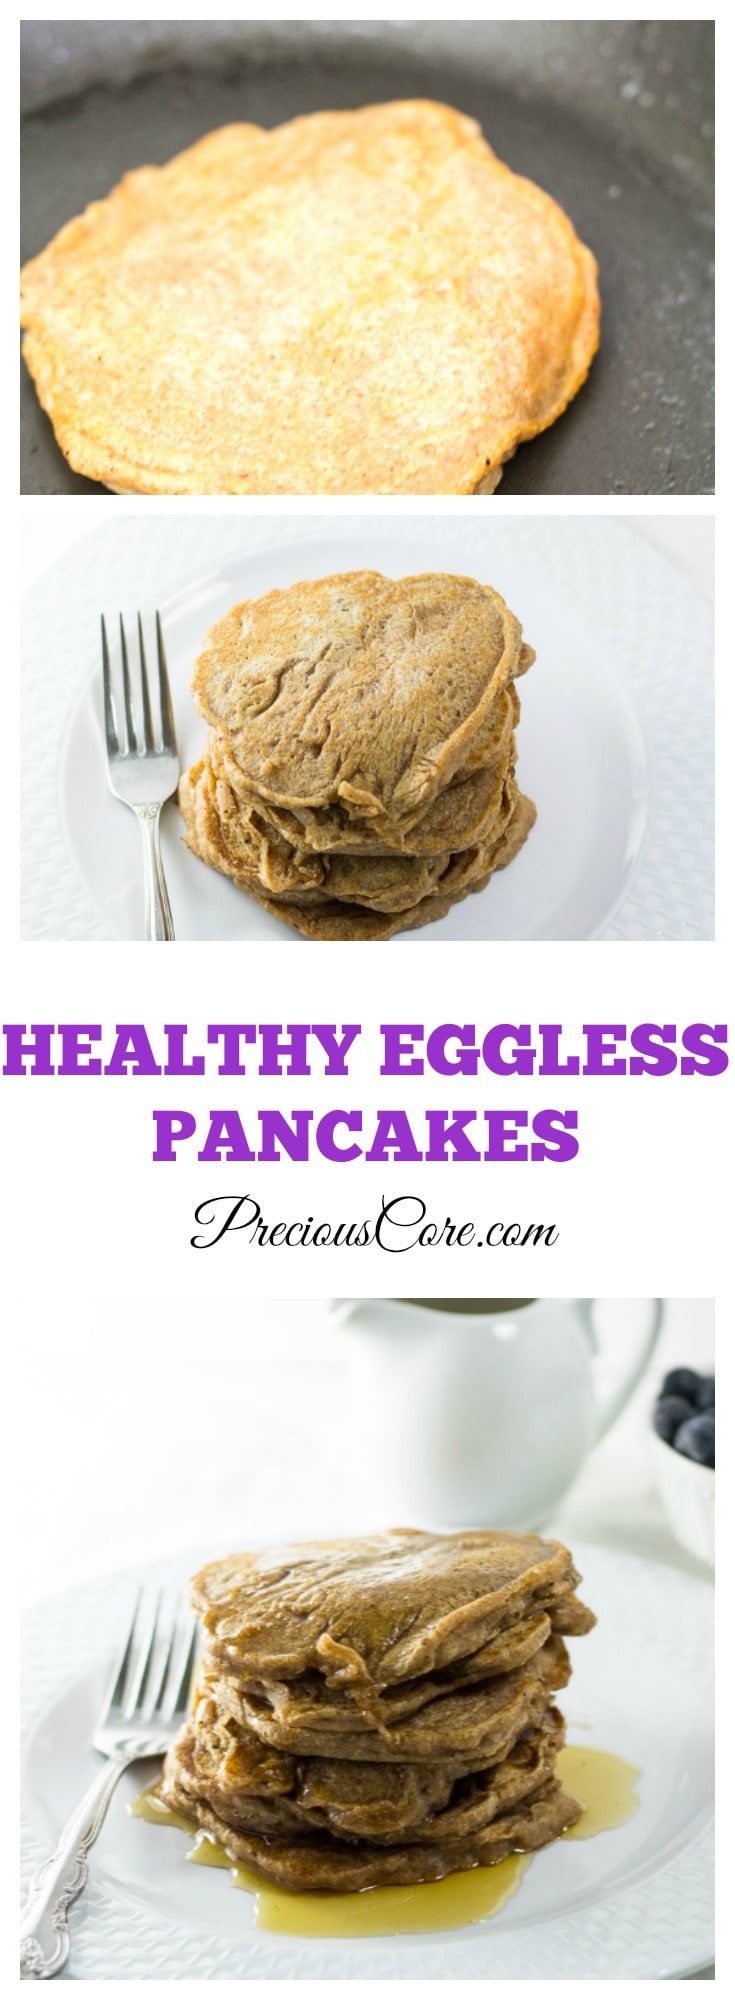 Healthy Eggless Pancakes